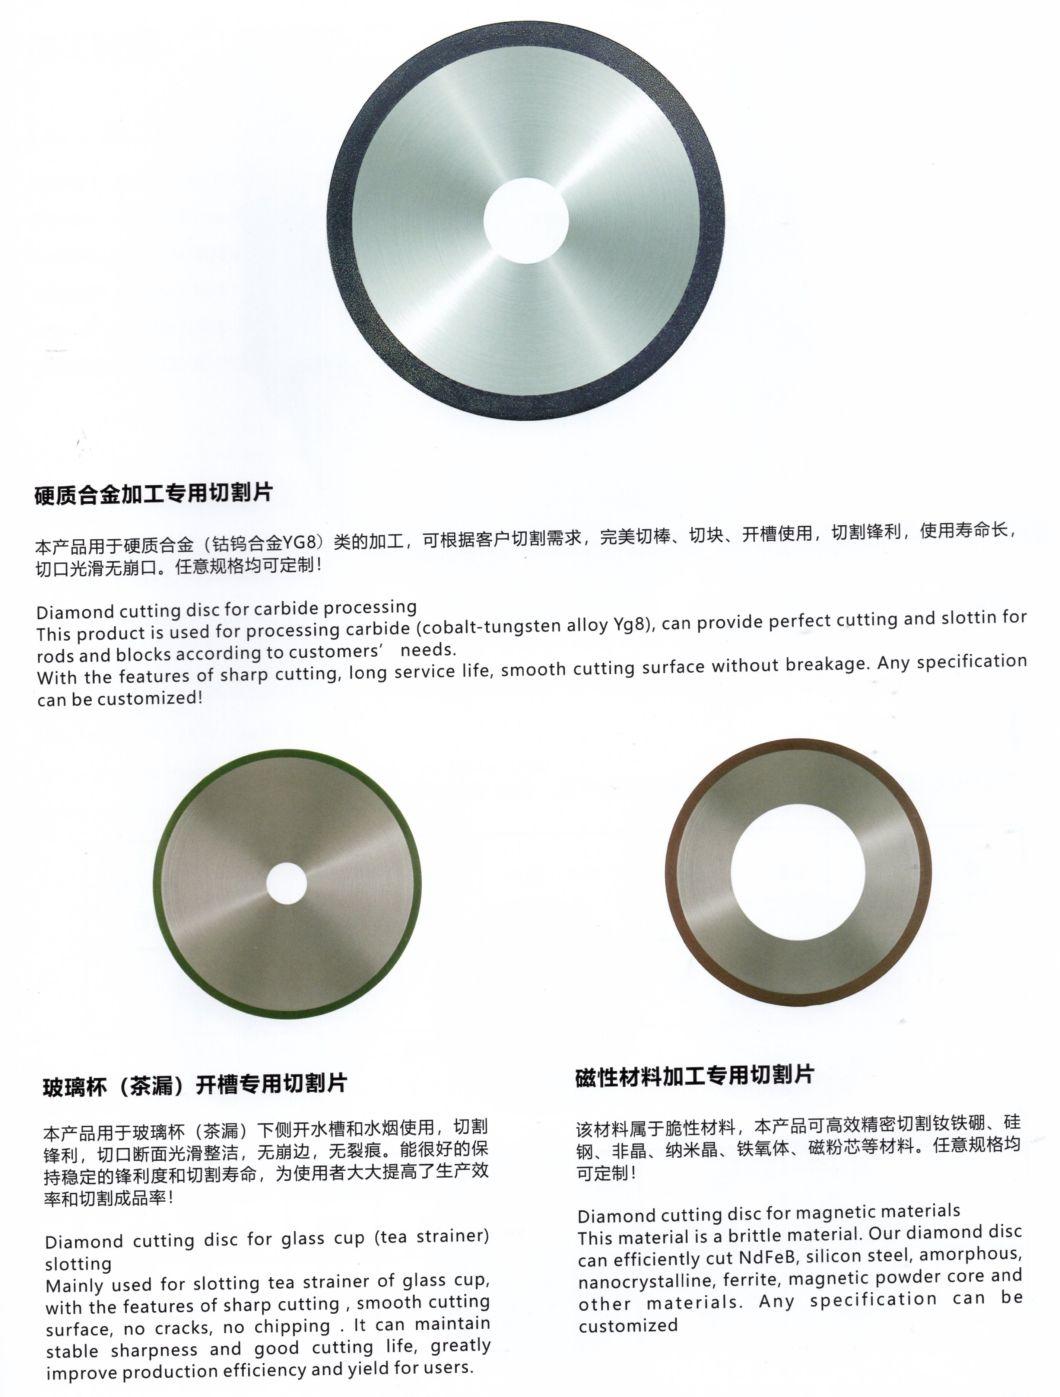 Metal Bonded Ultrathin Diamond Cutting Disc for Brake Pad Grooving